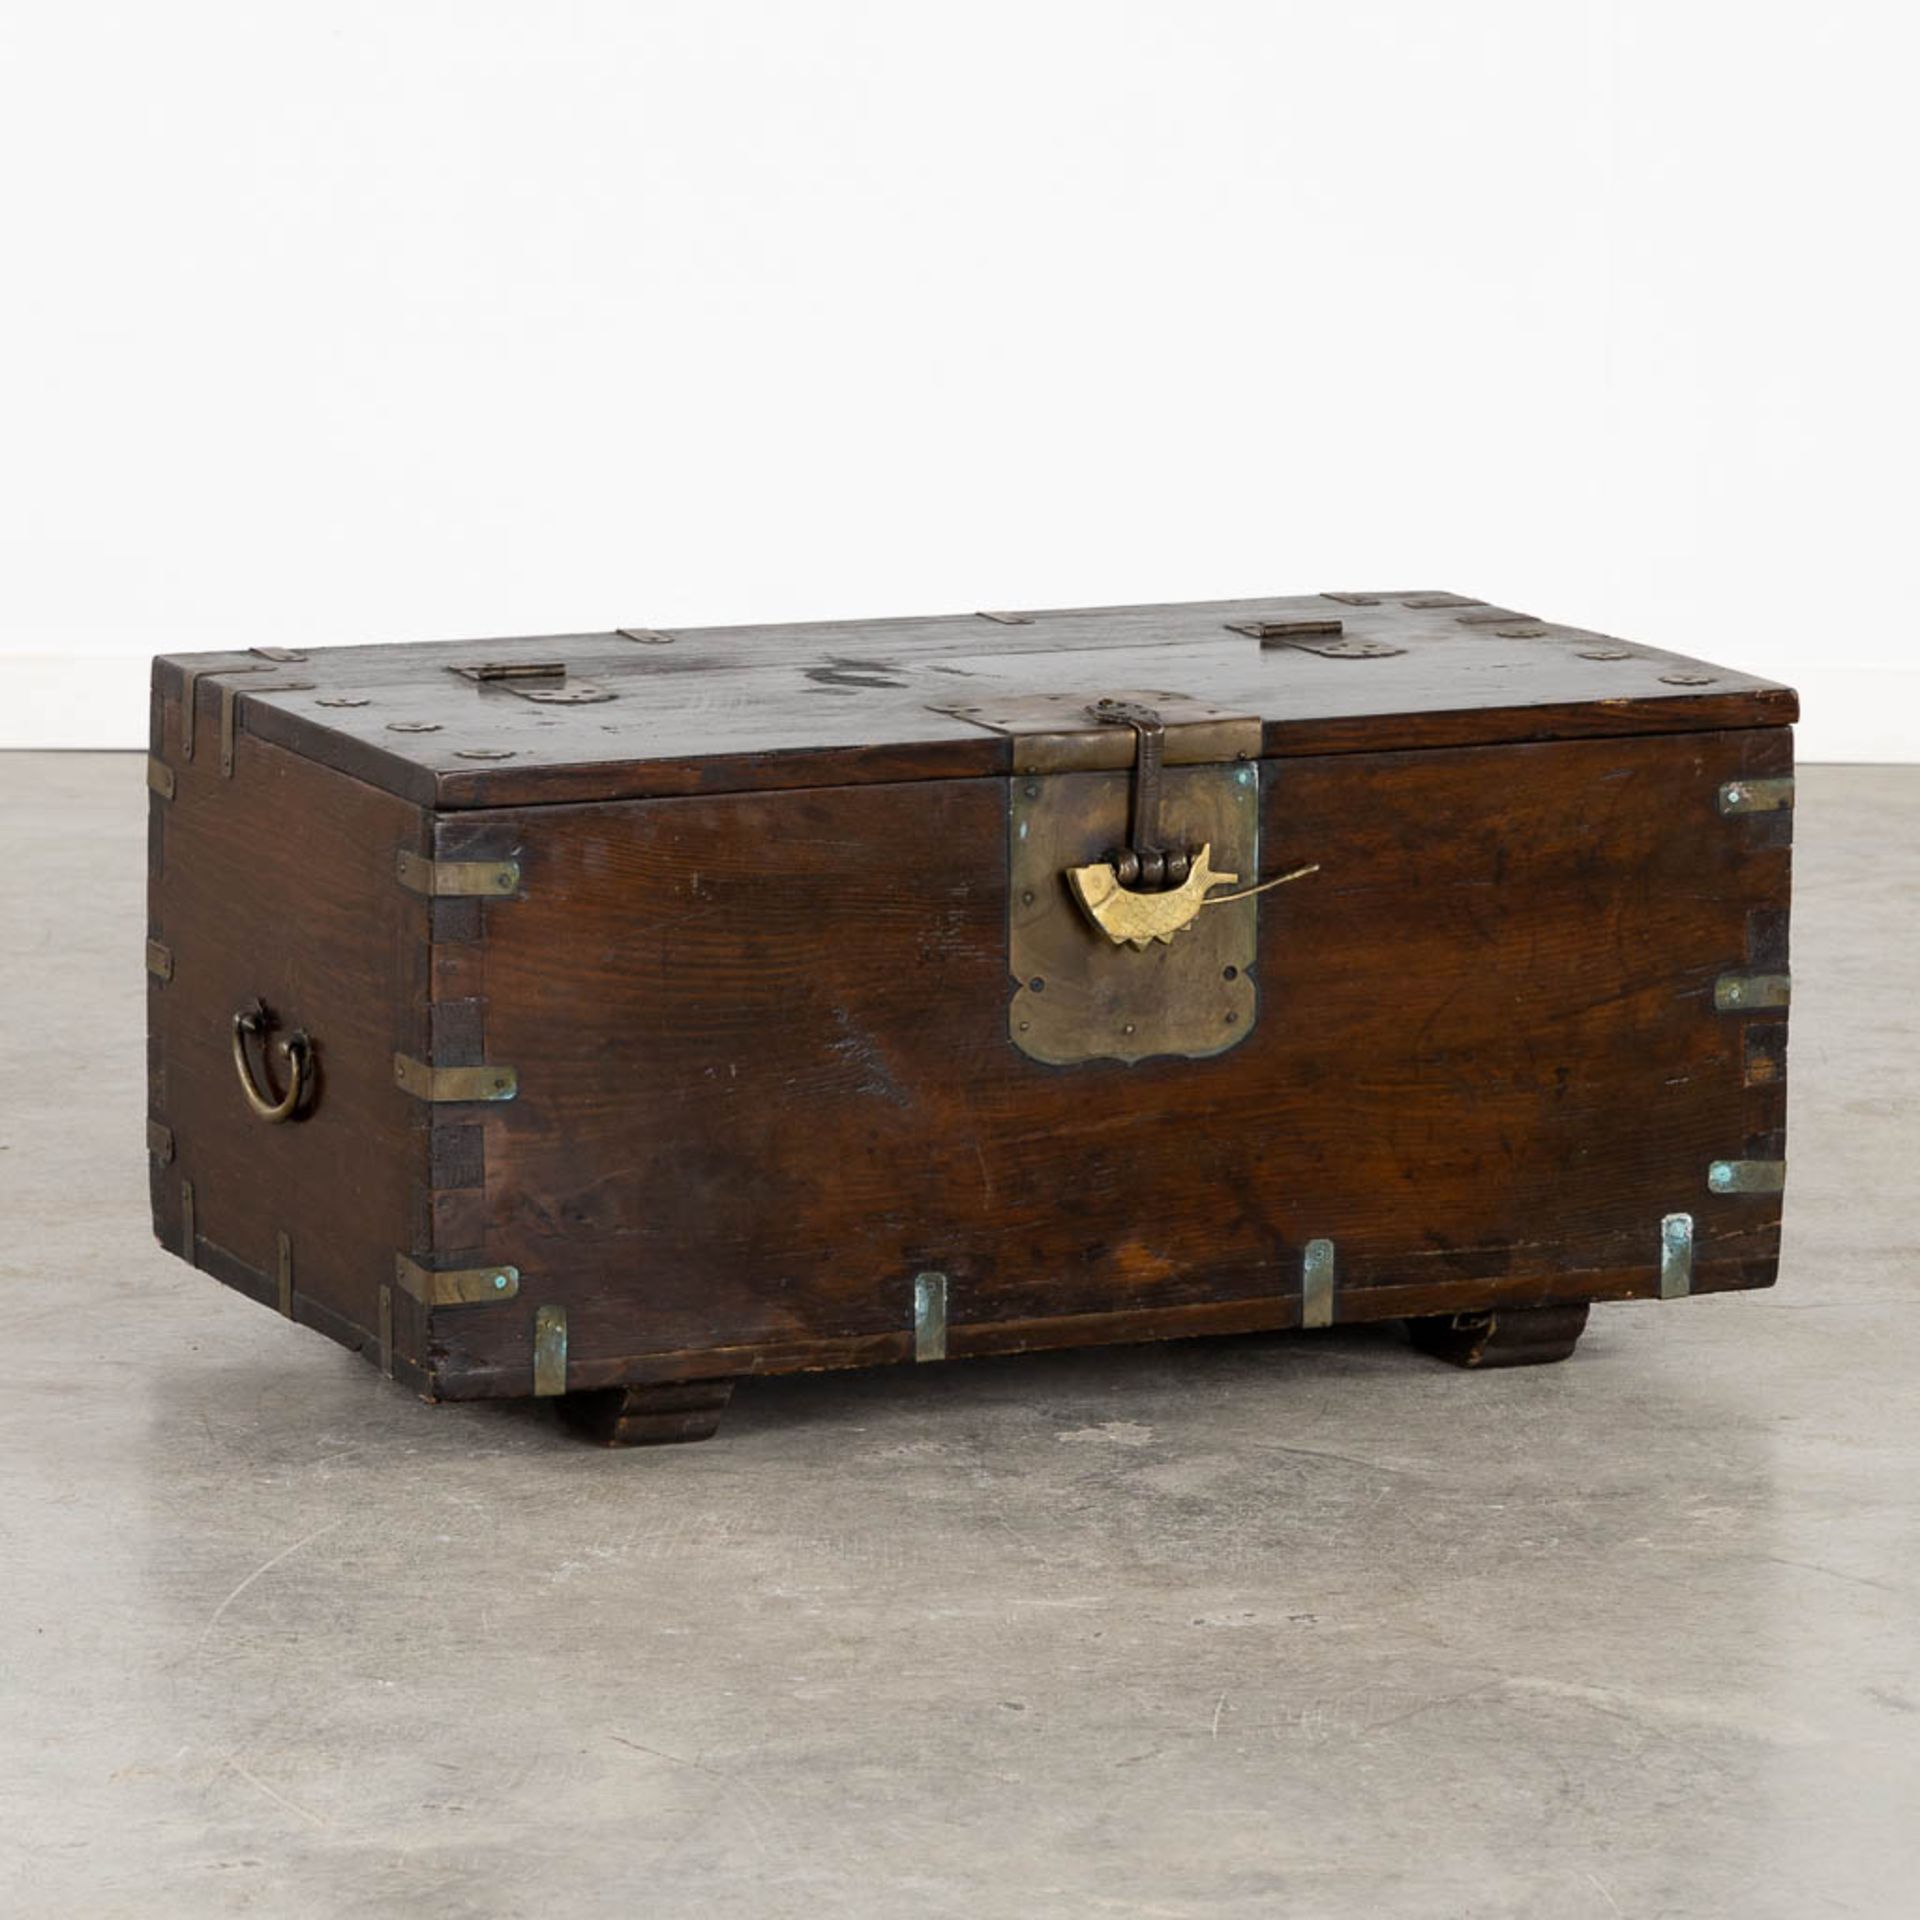 An antique Oriental chest with brass hardware. (L:43 x W:76 x H:40 cm)